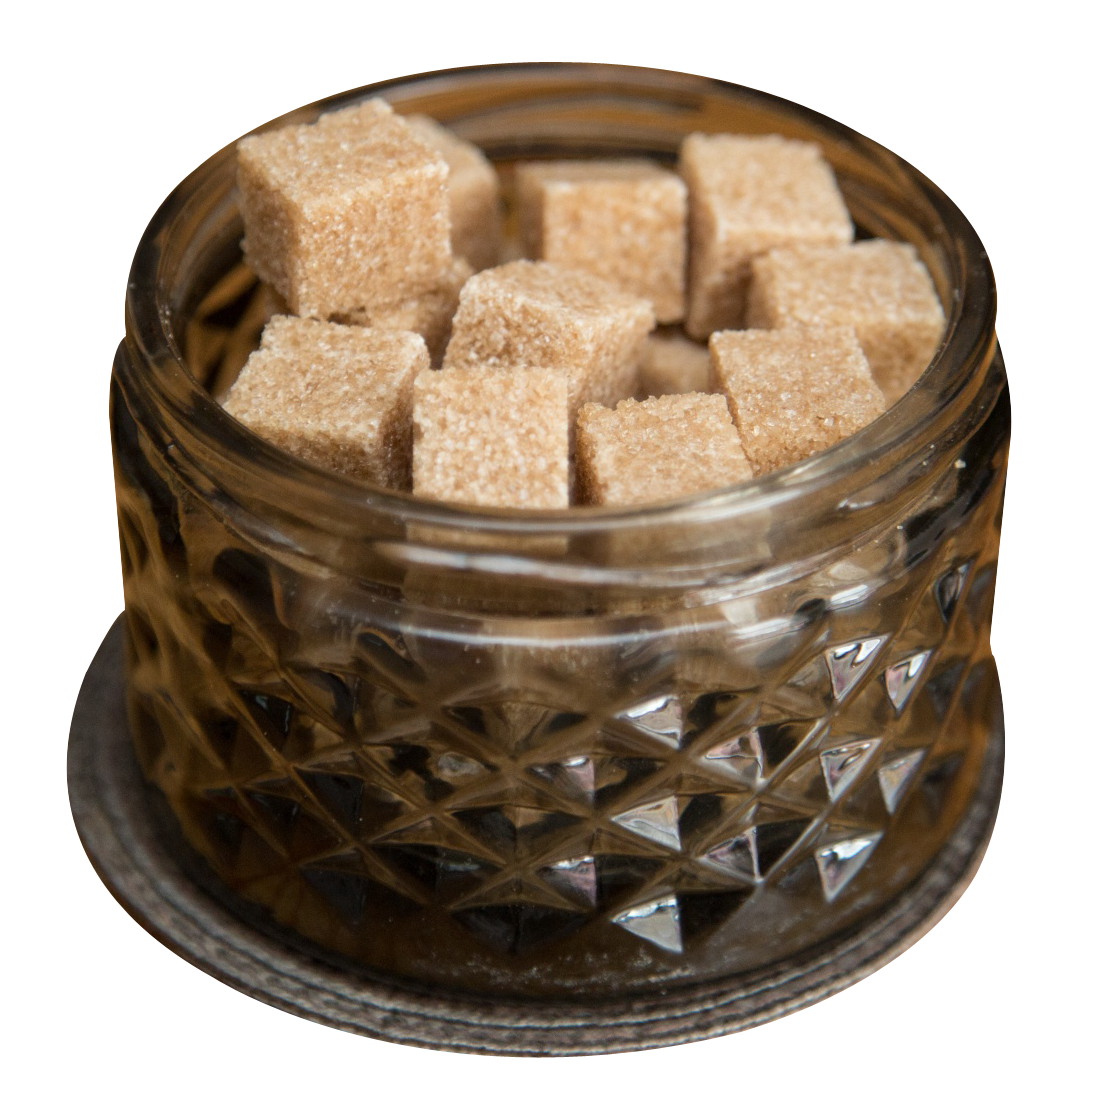 brown cane sugar cubes png image pngpix #34703